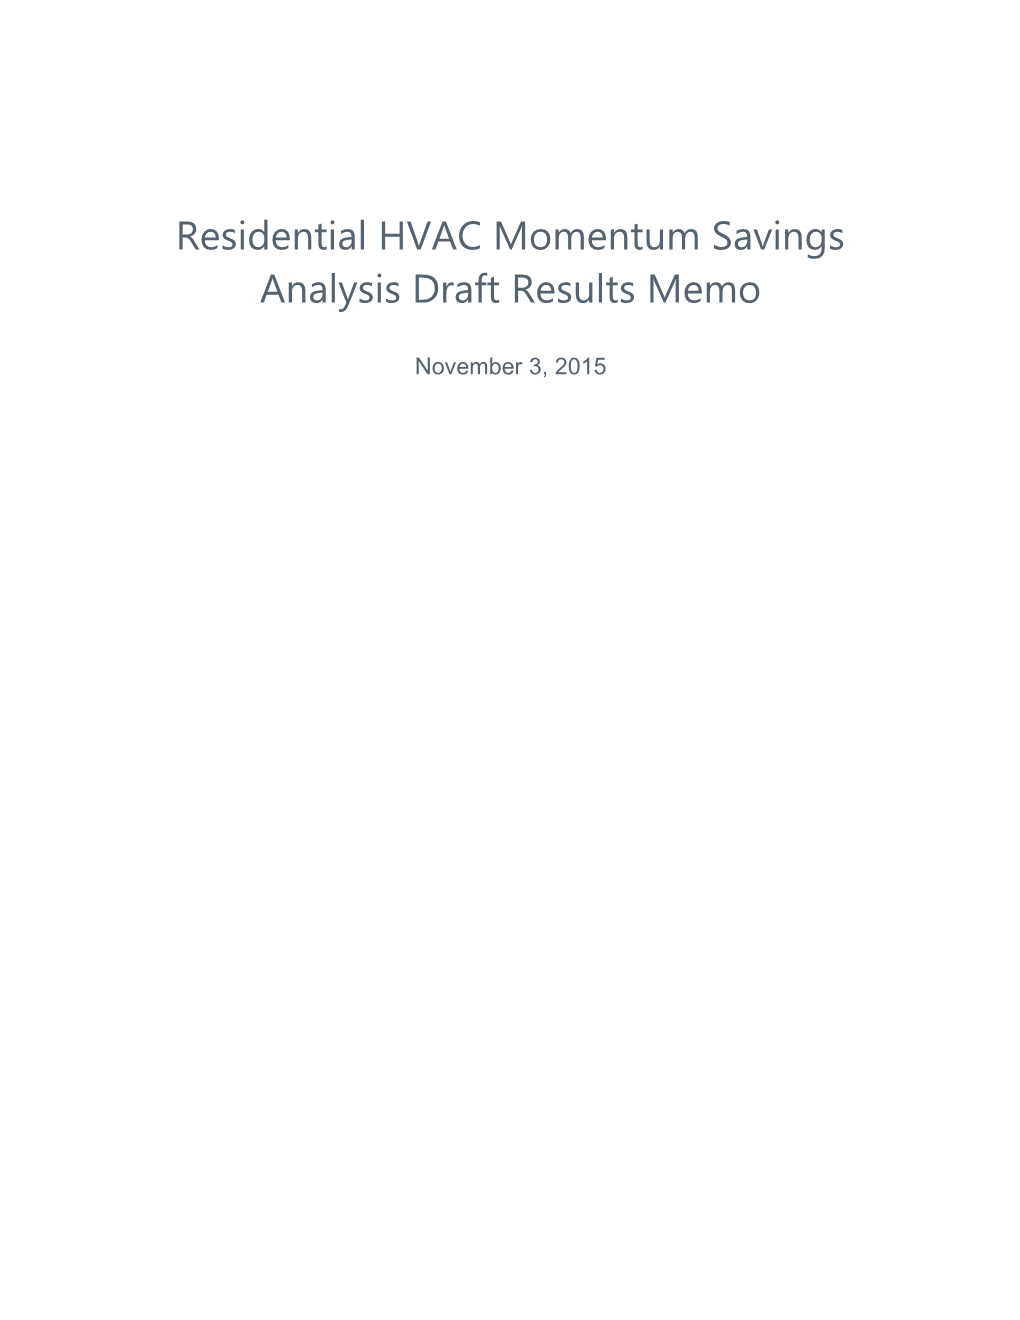 Draft Residential HVAC Momentum Savings Results Memo 03Nov2015